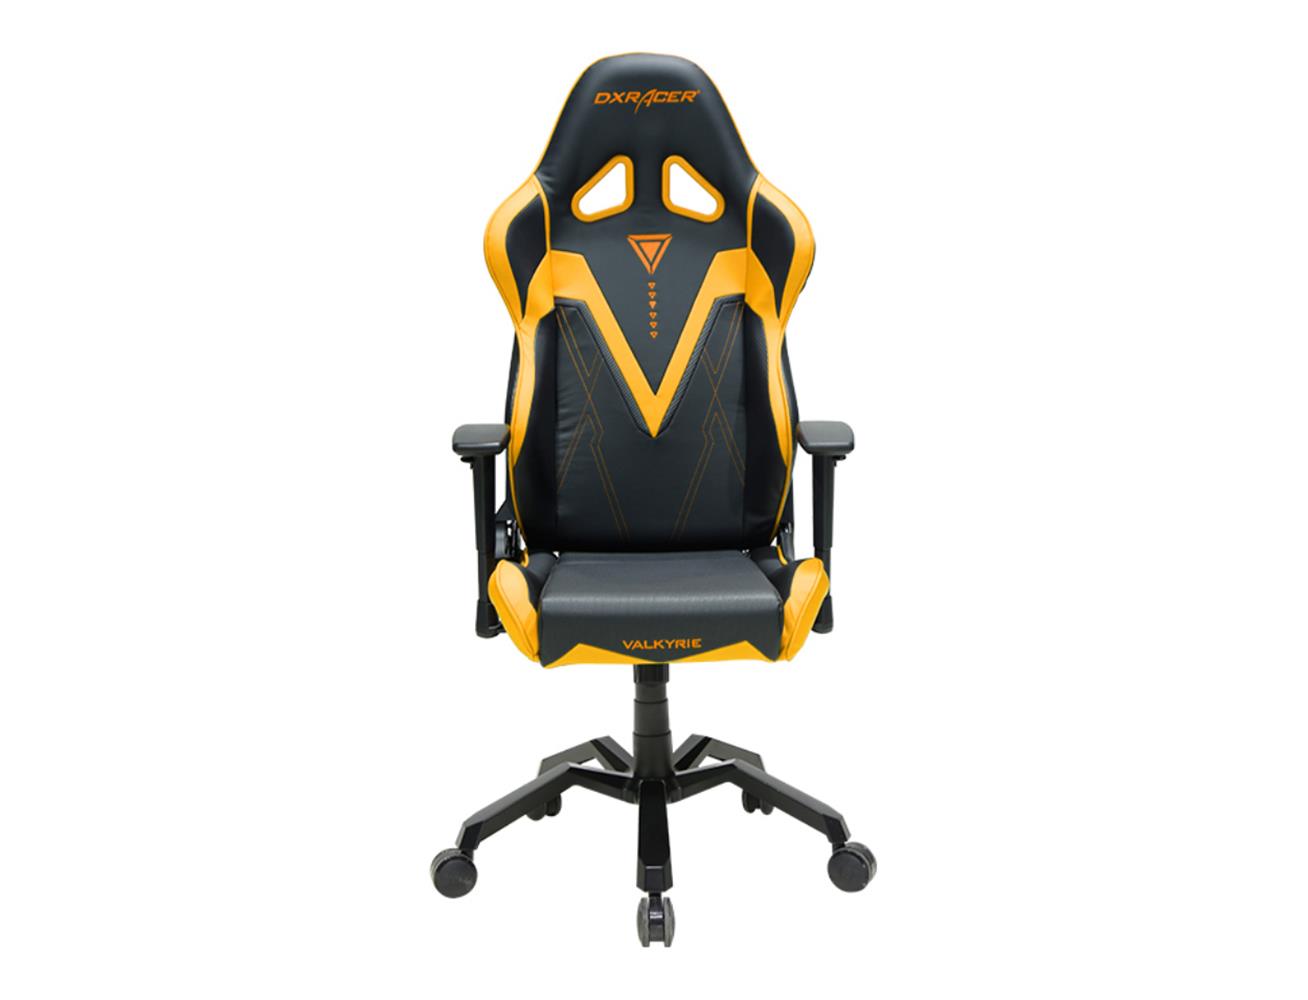  DXRacer  Valkyrie Series Gaming Chair  Black Yellow Blink 